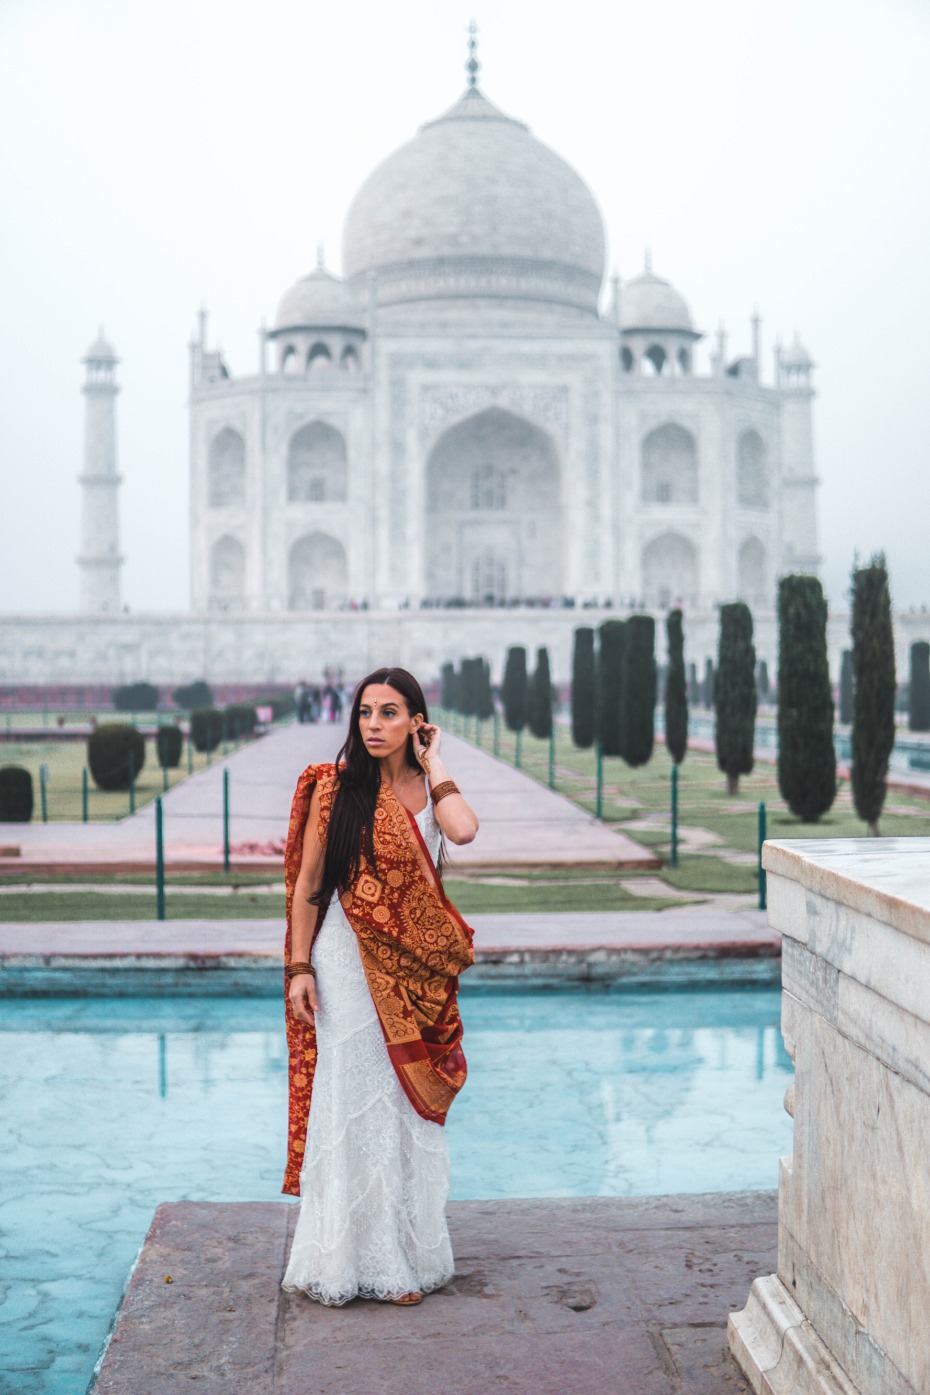 Zoe in Watters gown in India